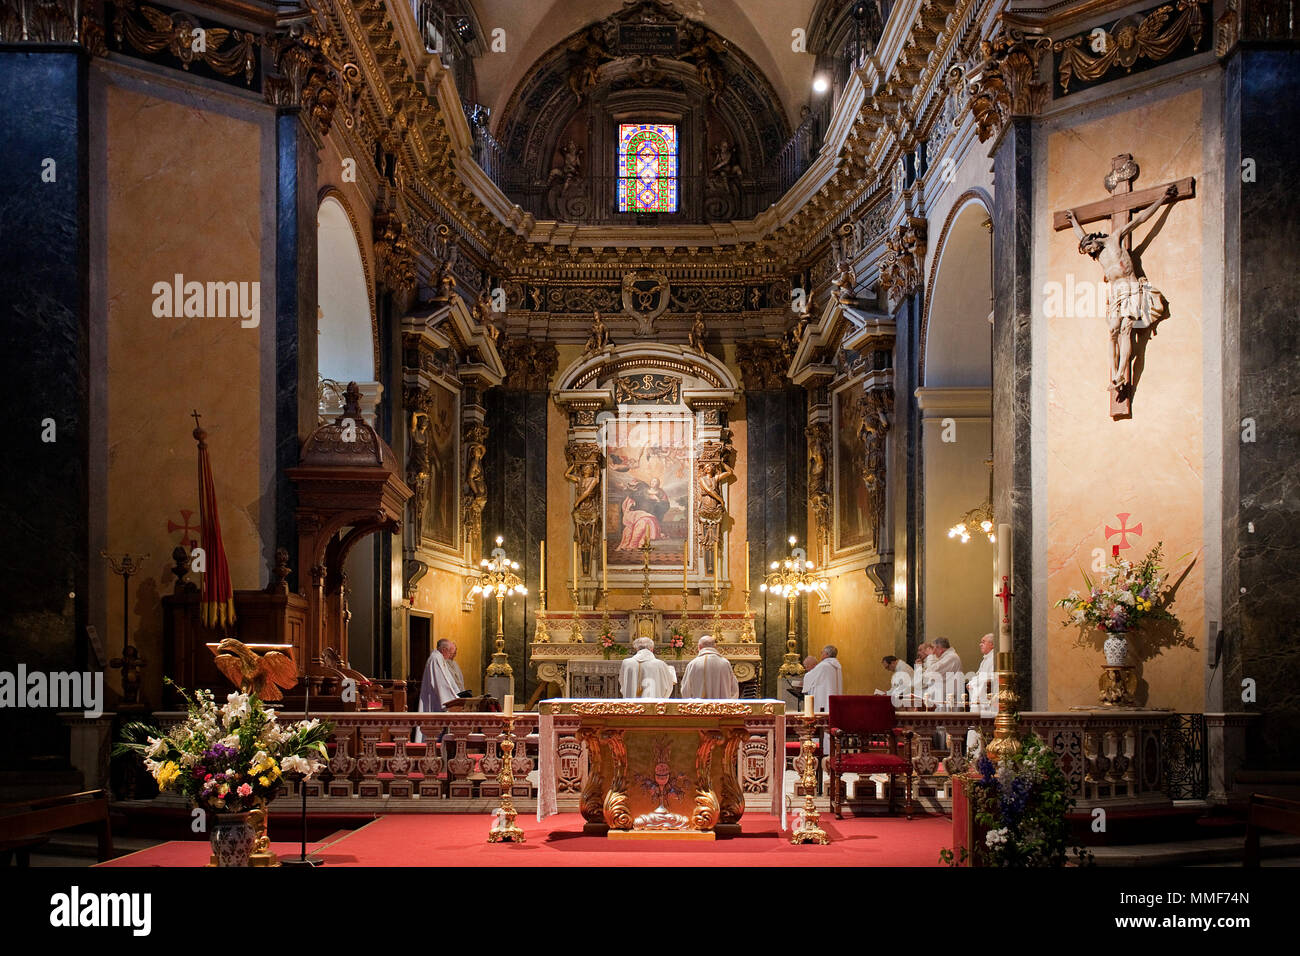 Im Inneren der Kathedrale Santa Reparata am Place Rossetti, Nizza, Côte d'Azur, Alpes Maritimes, Südfrankreich, Frankreich, Europa Stockfoto